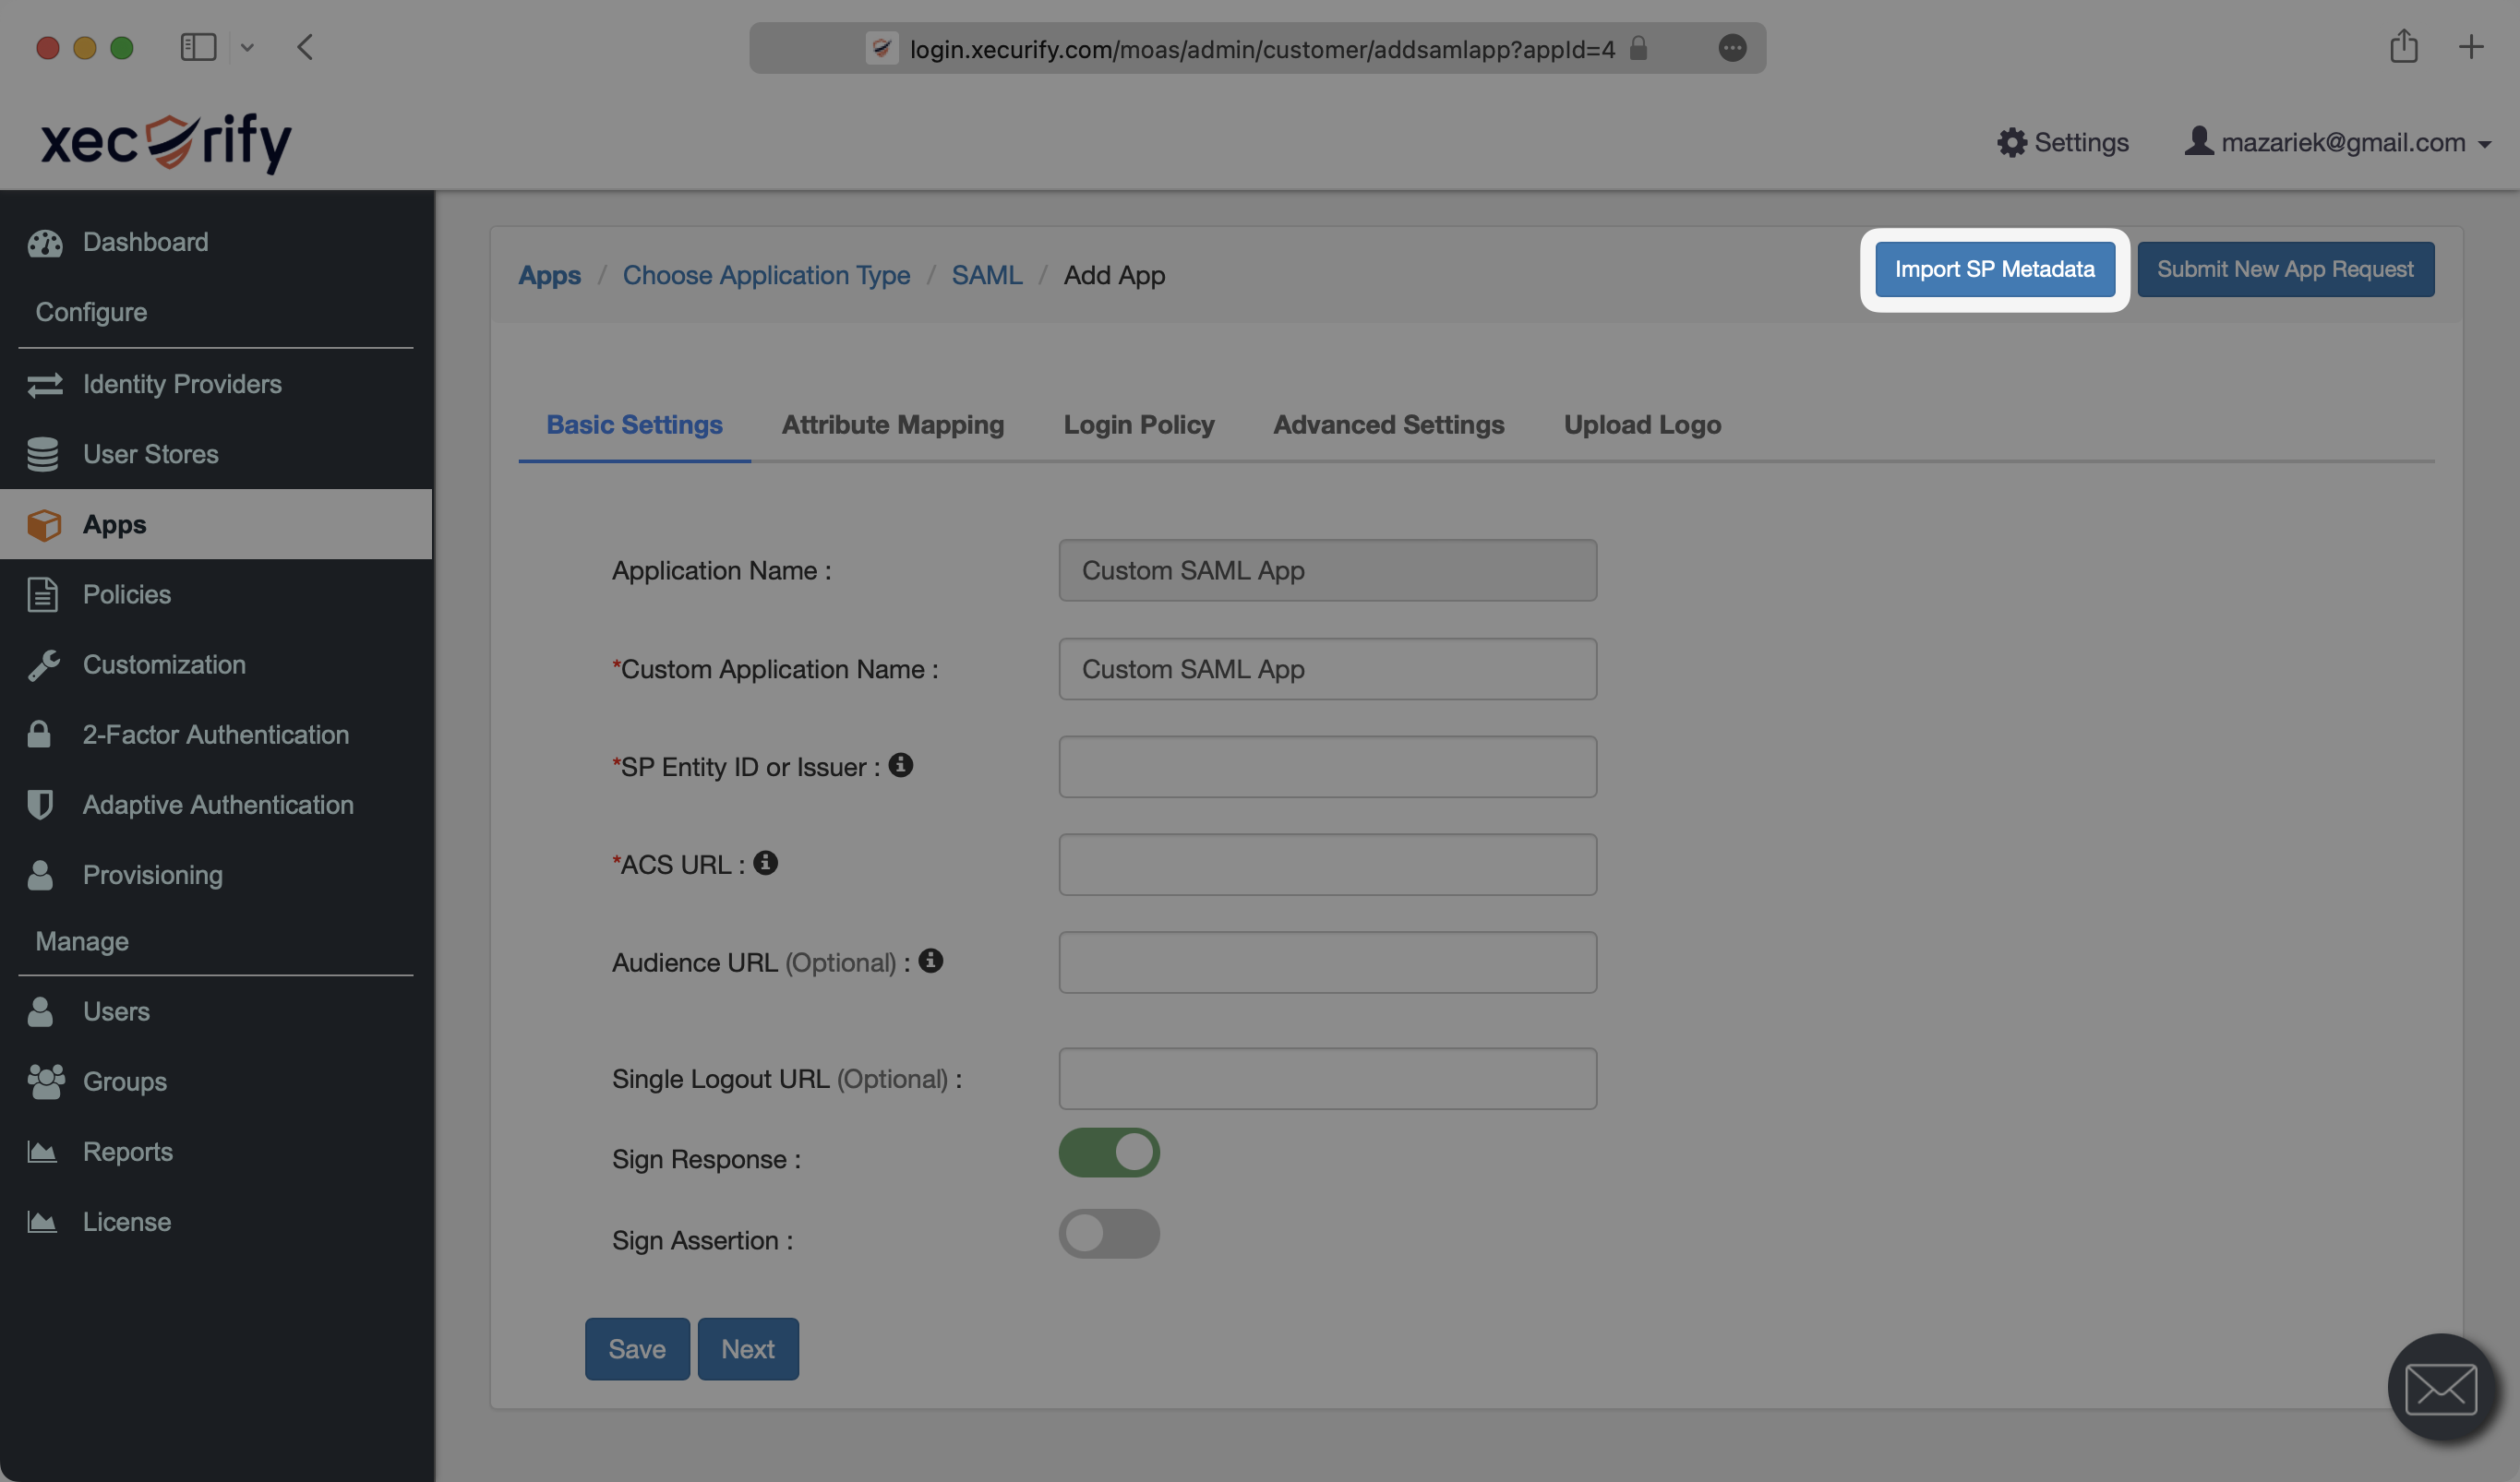 A screenshot highlighting the "Import SP Metadata" button in the miniOrange Dashboard.